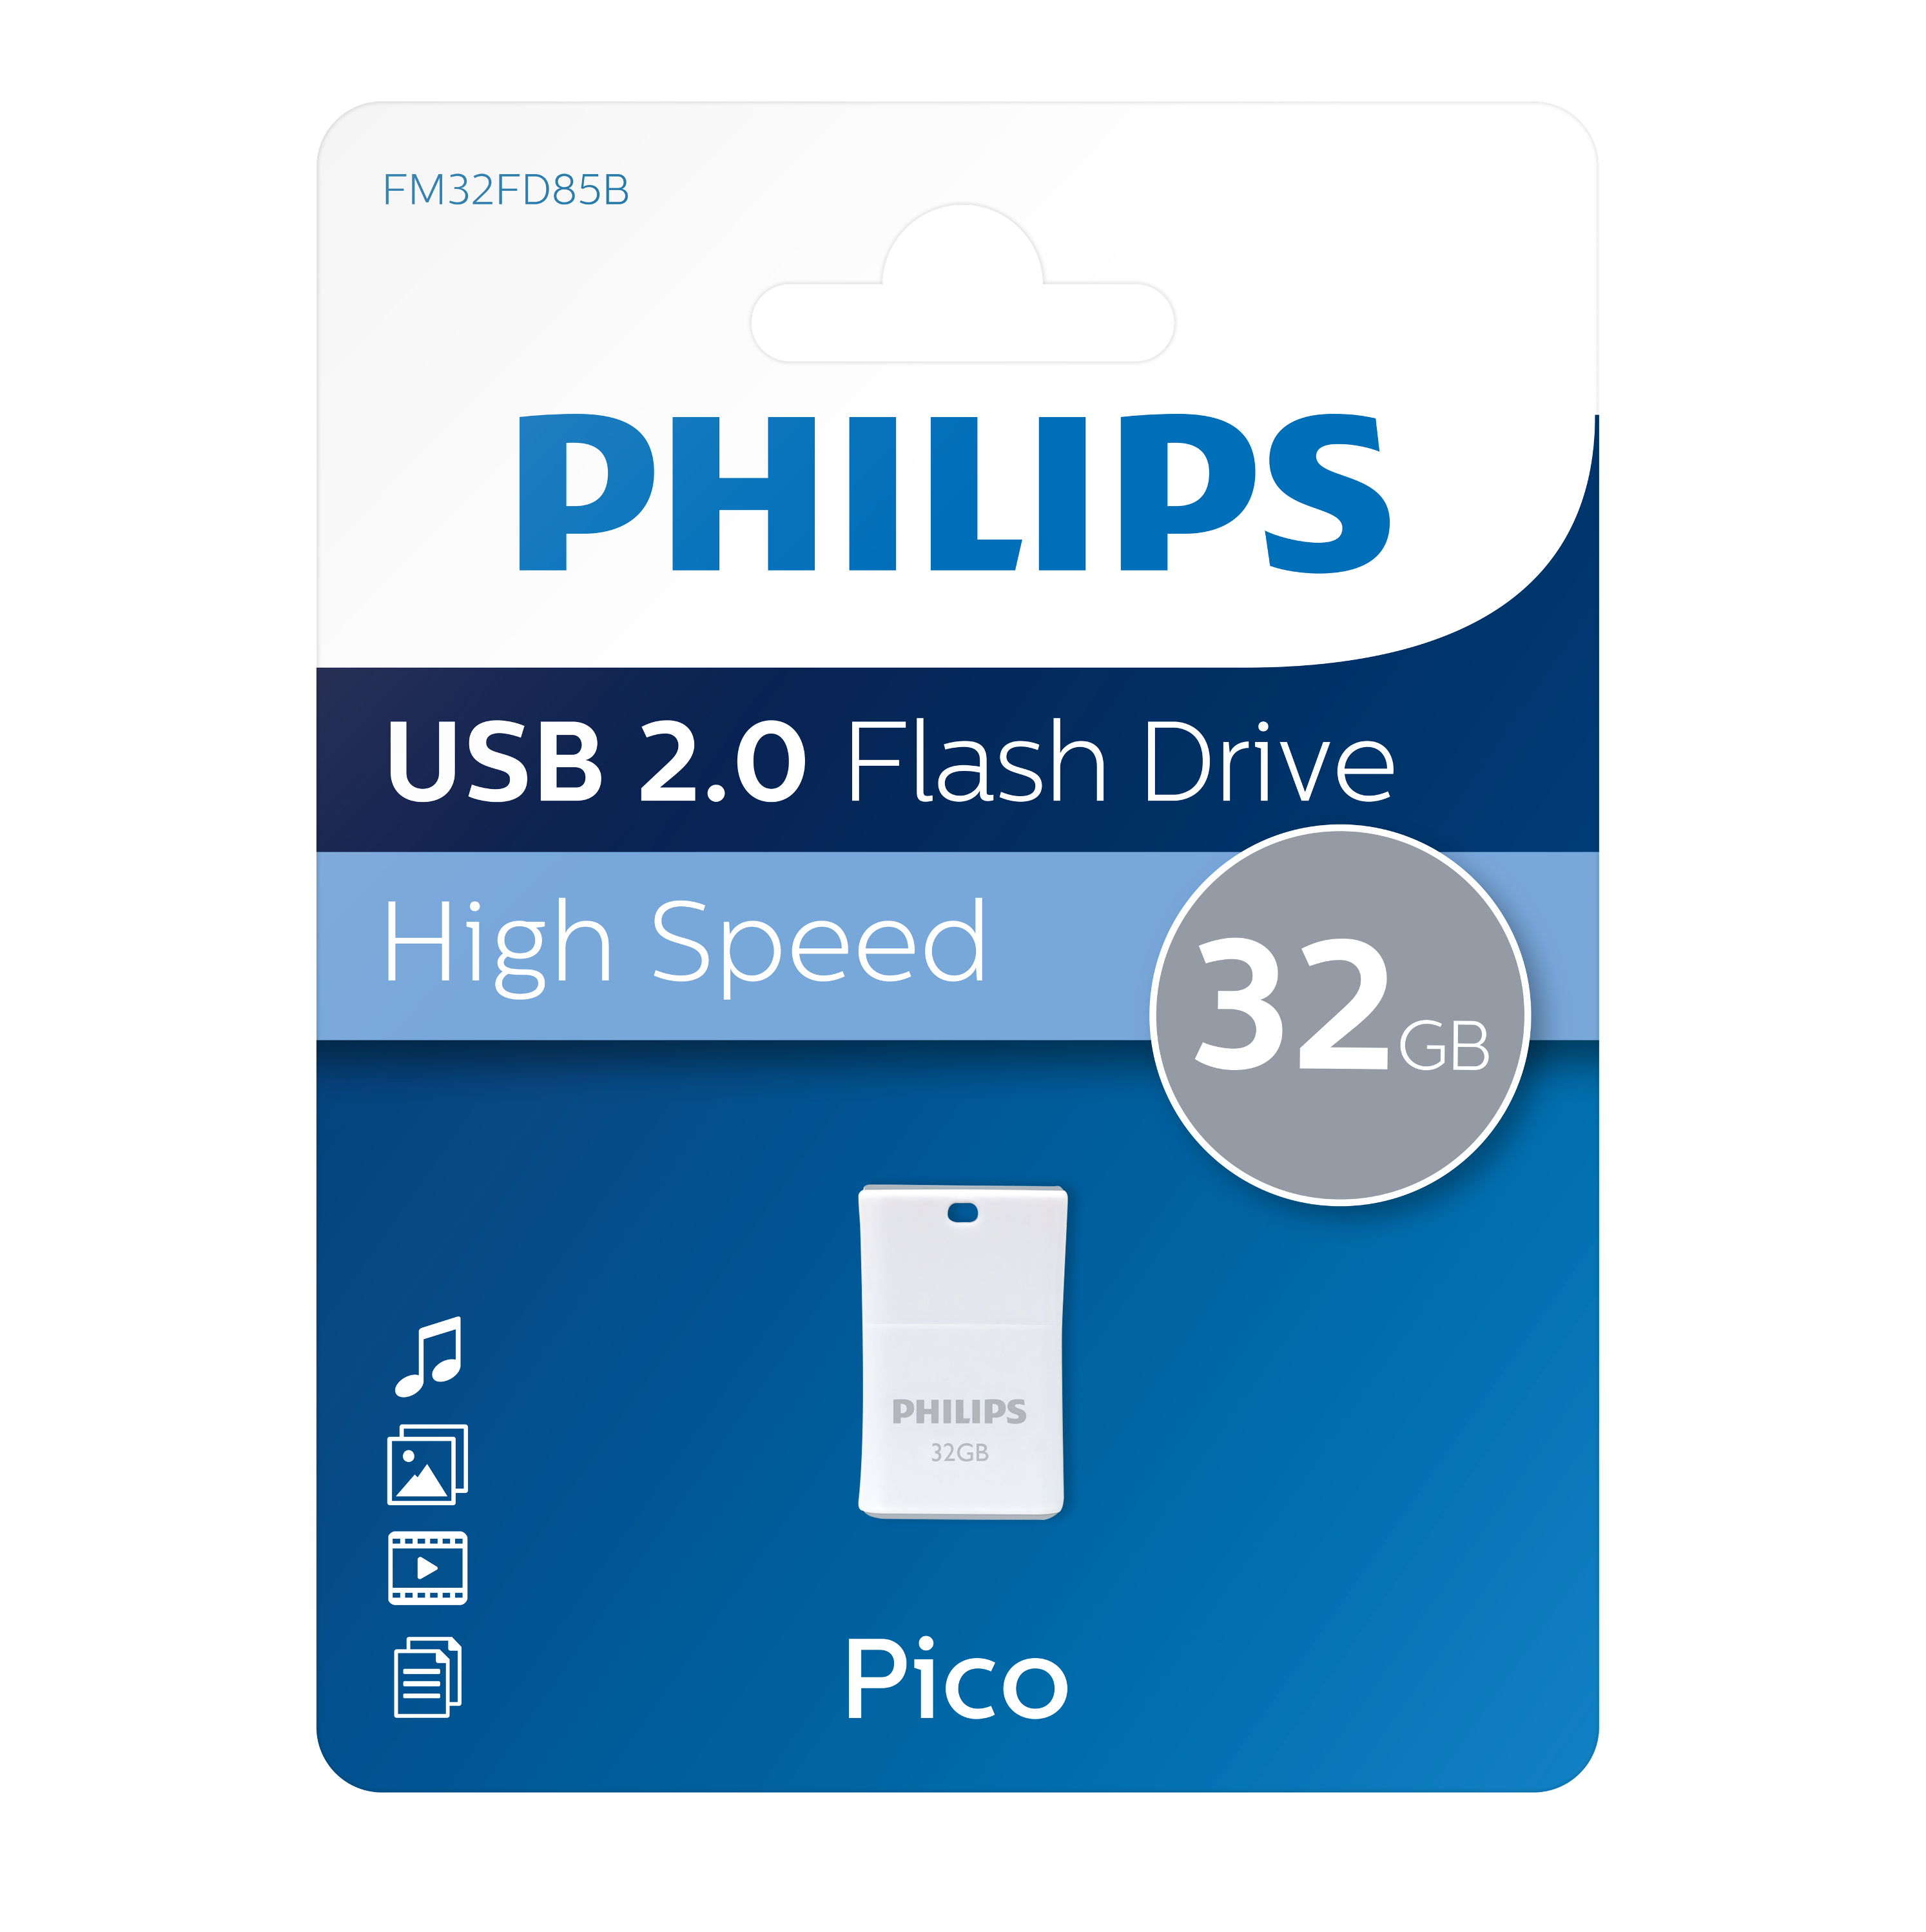 PHILIPS Edition Pico GB) 32 (Weiß, USB-Stick